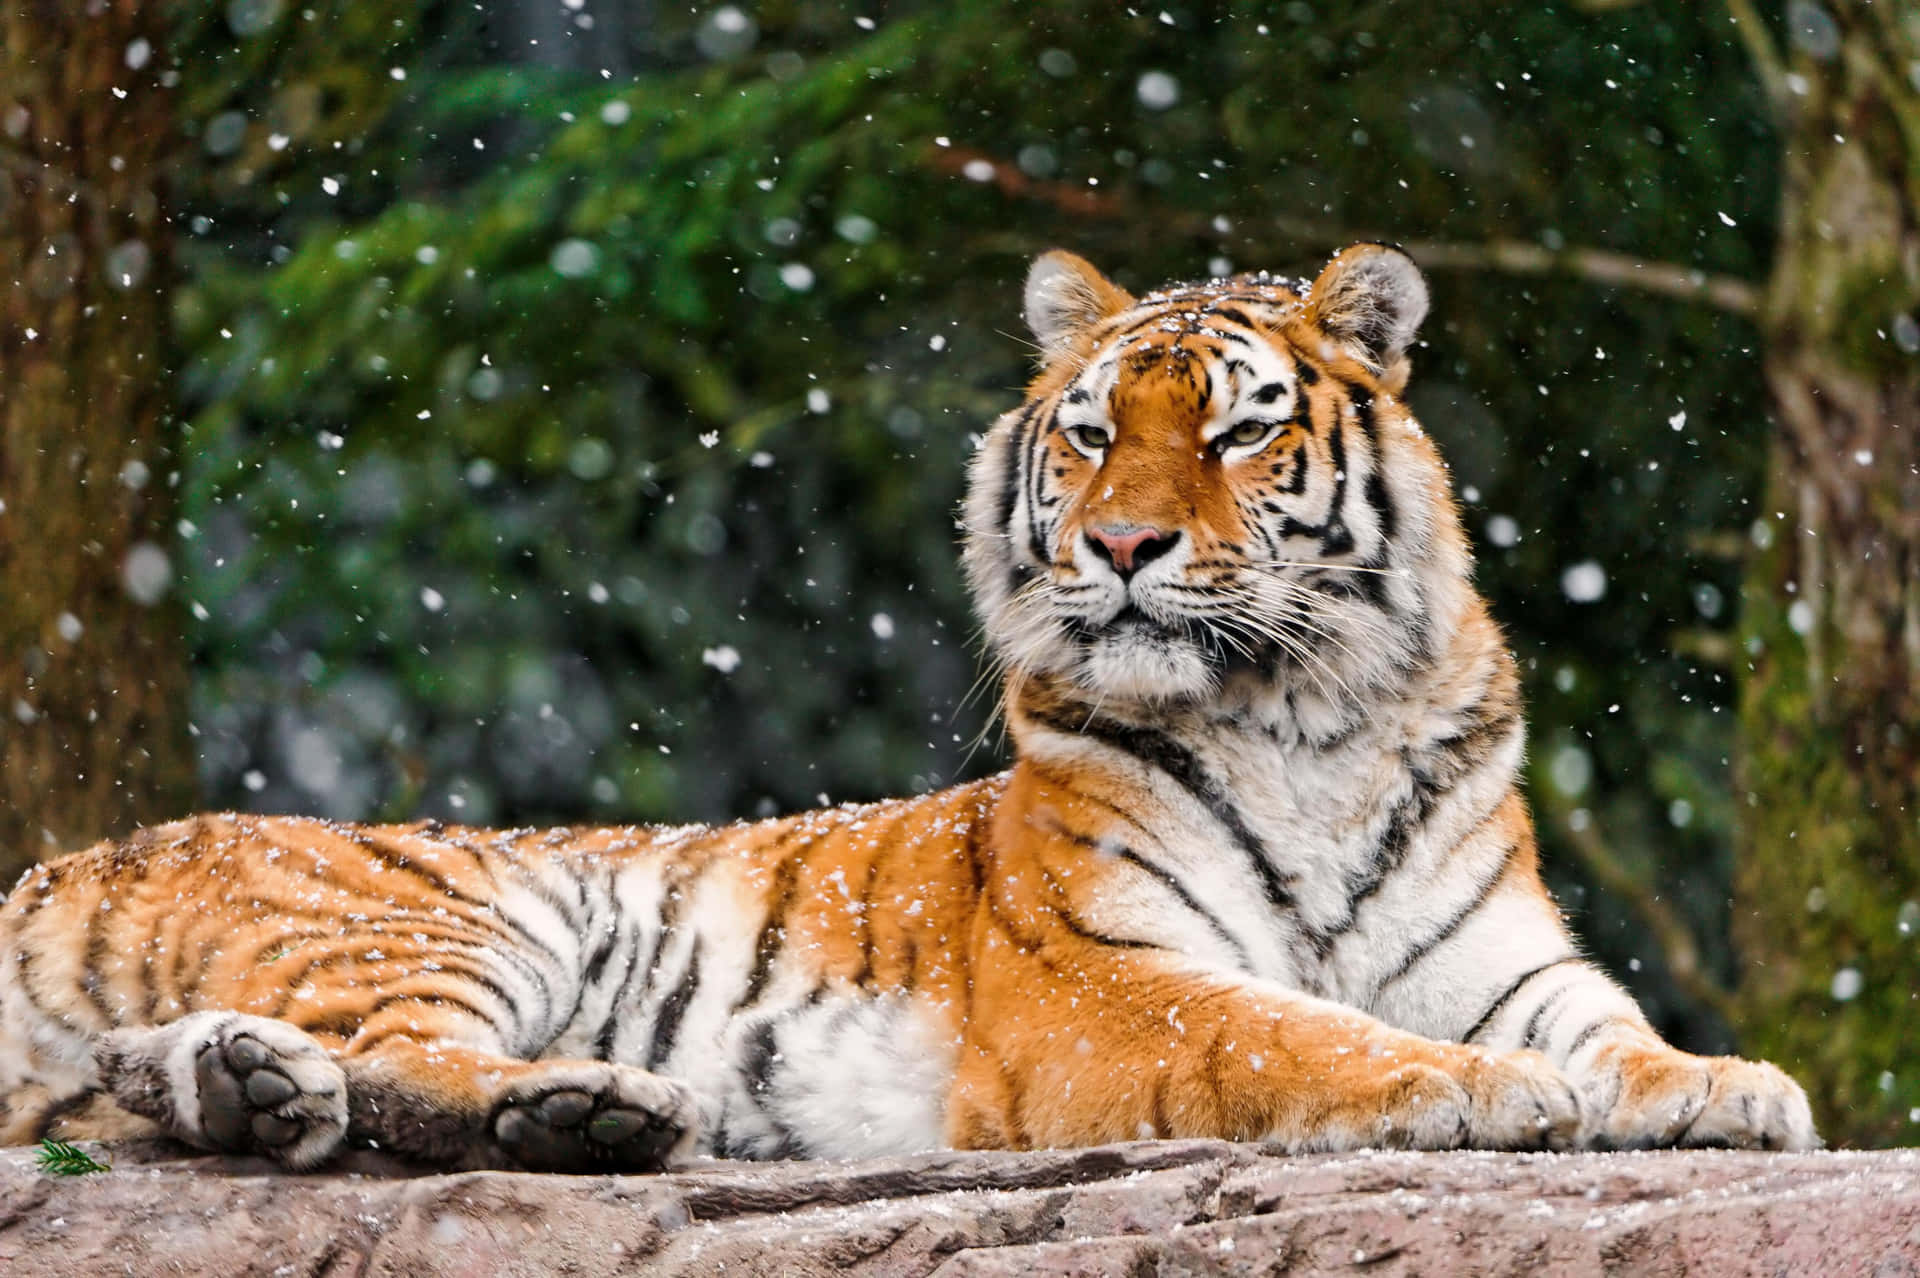 Majestic tiger in its natural habitat